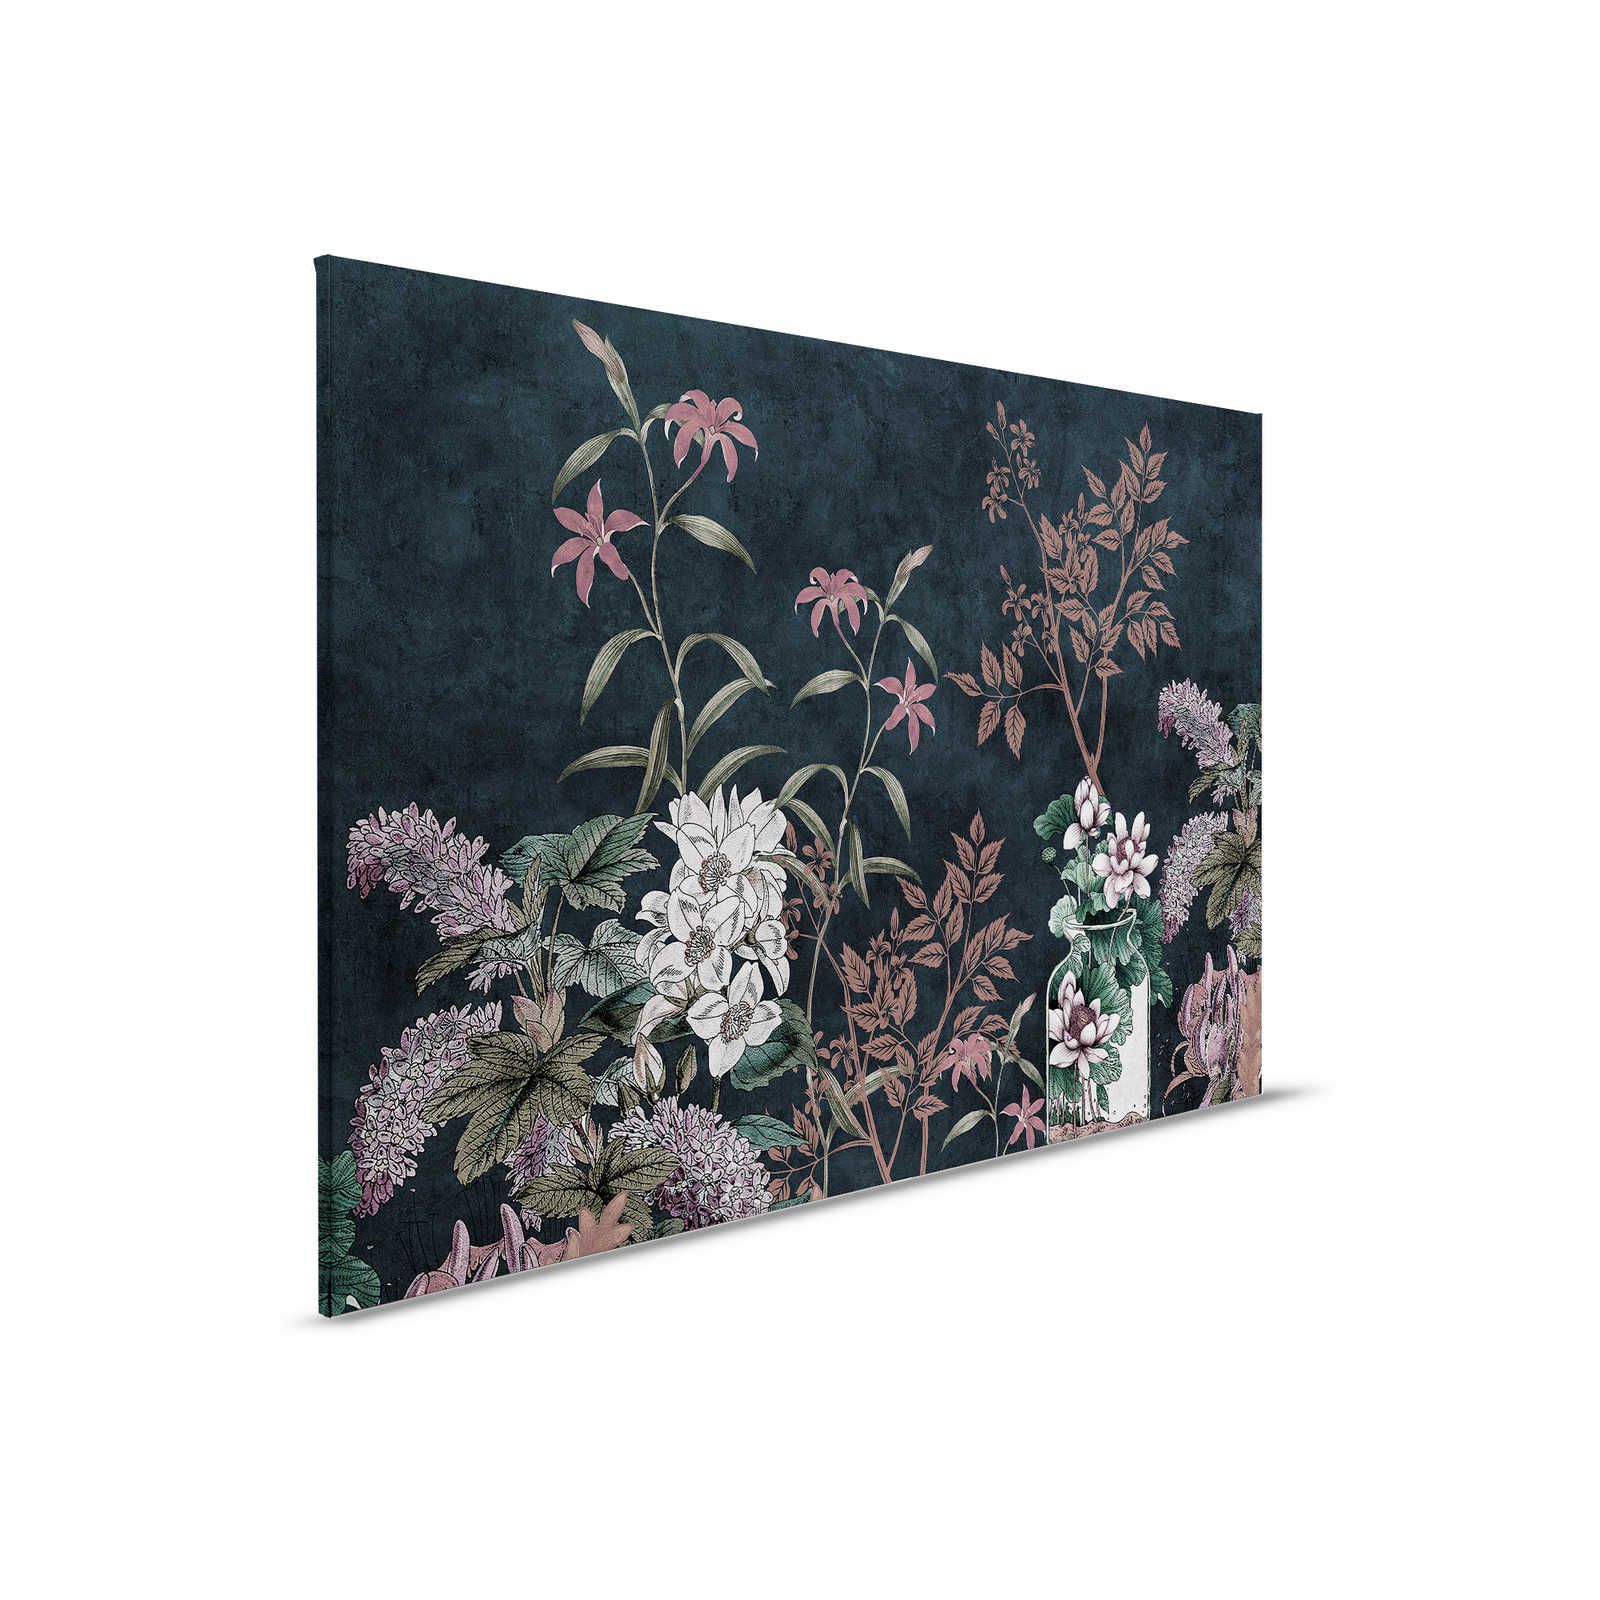 Dark Room 2 - Black Canvas Painting Botanical Pattern Pink - 0.90 m x 0.60 m
